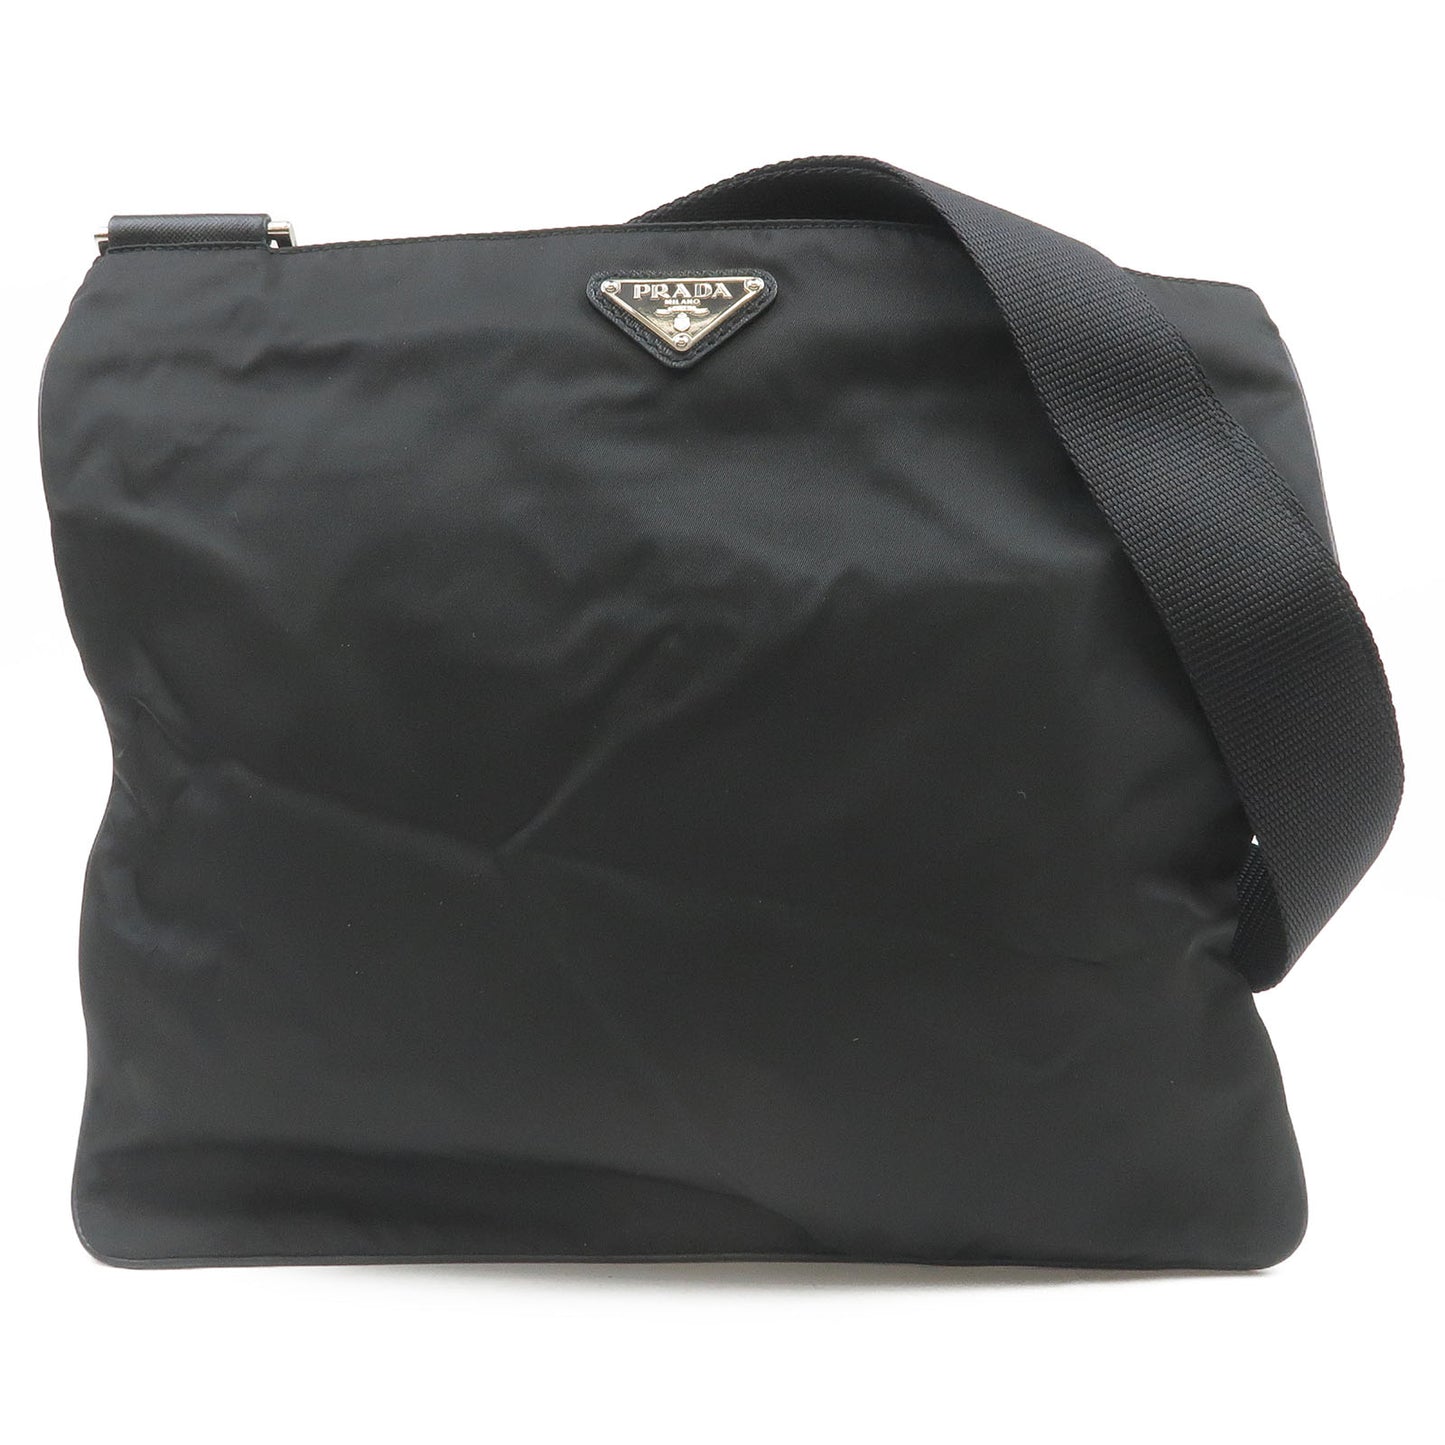 PRADA-Nylon-Leather-Shoulder-Bag-Purse-NERO-Black-VA0340